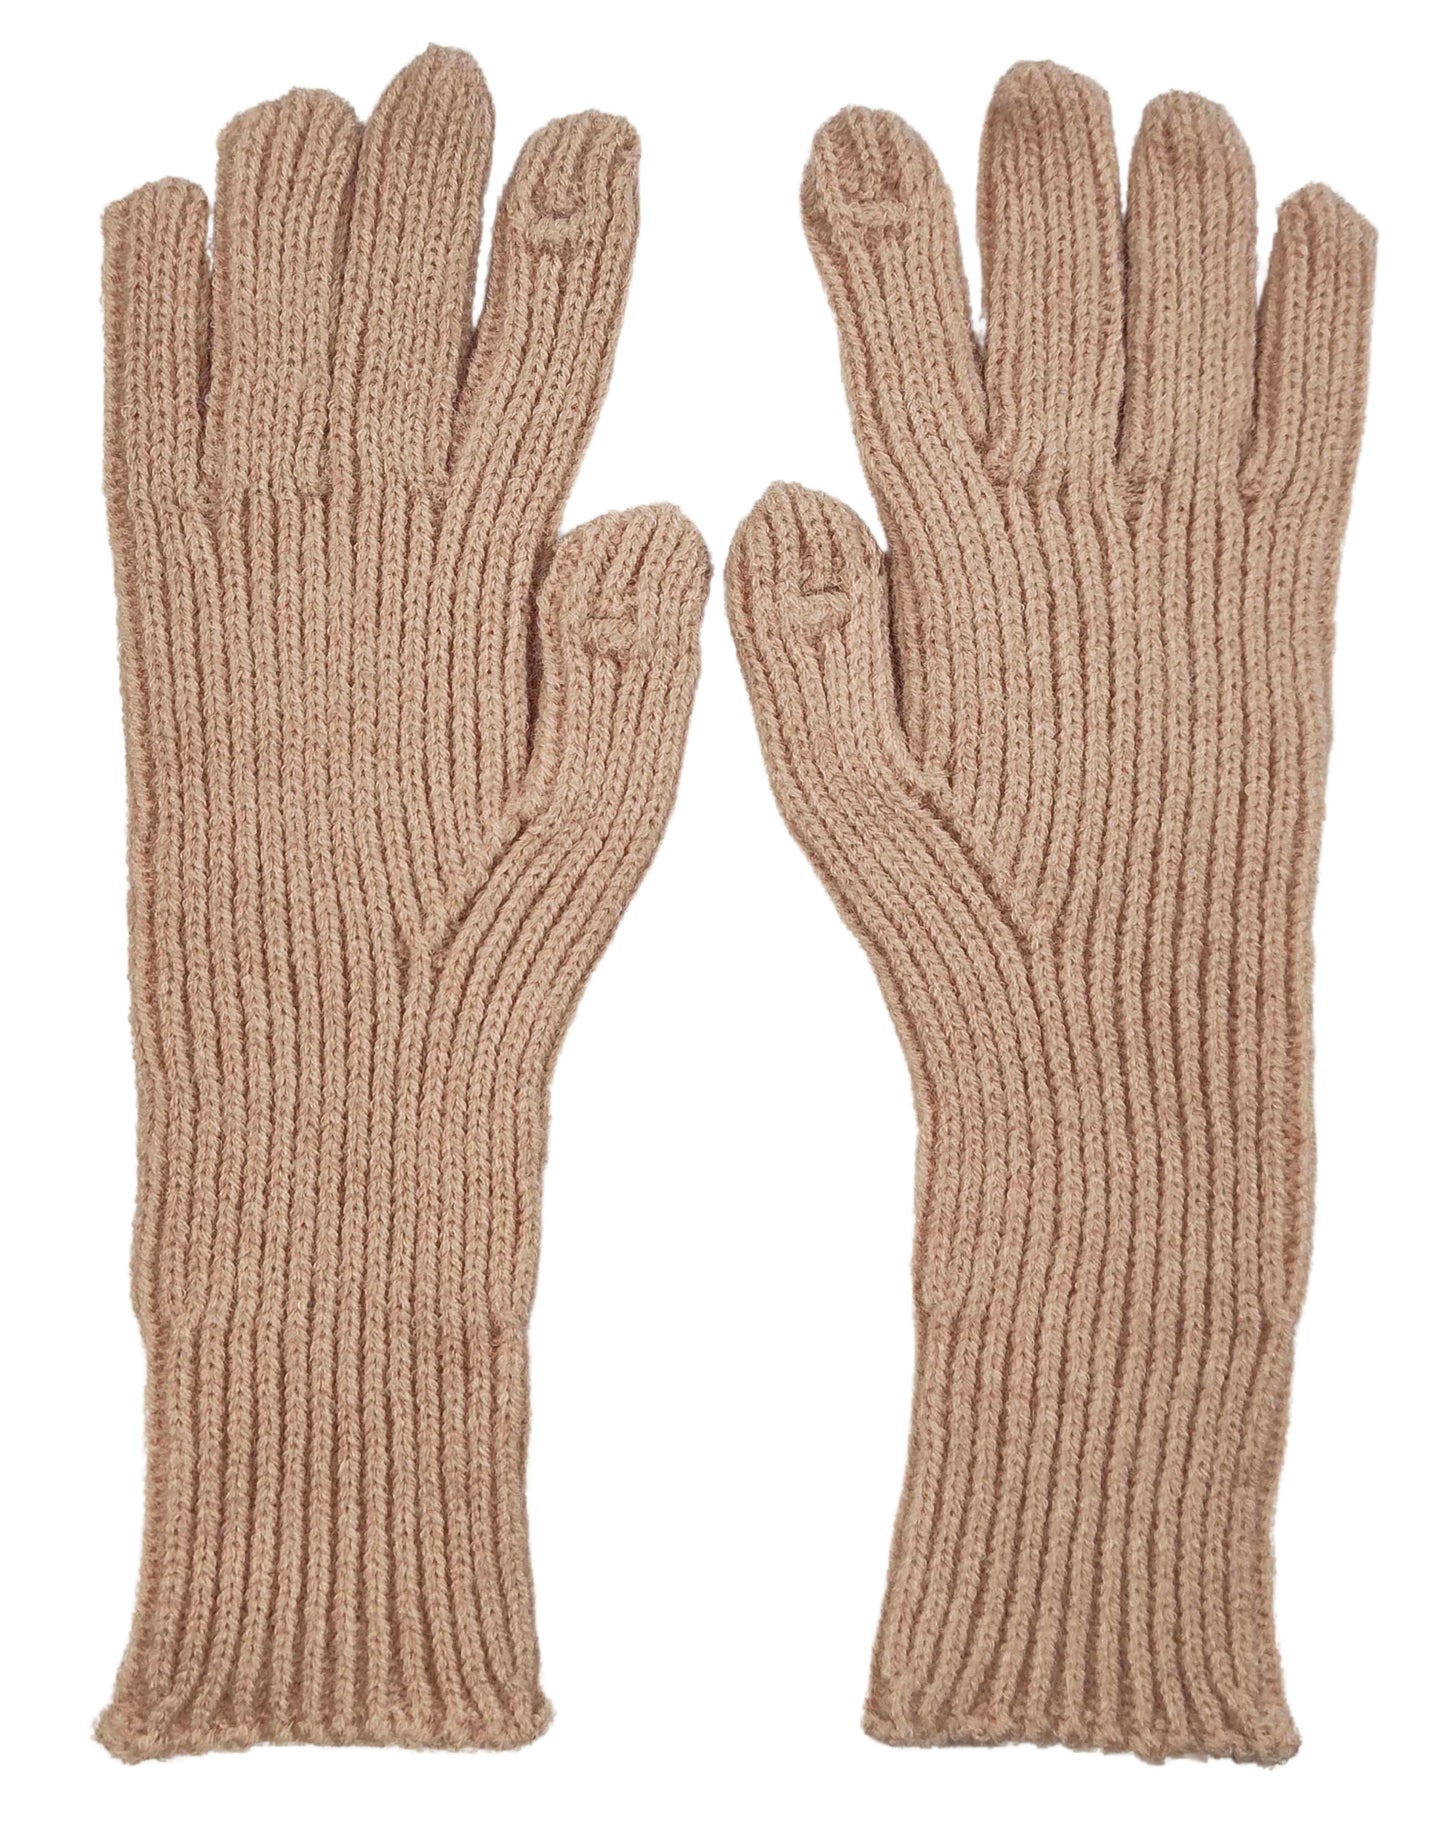 Urban Style Finley Gloves